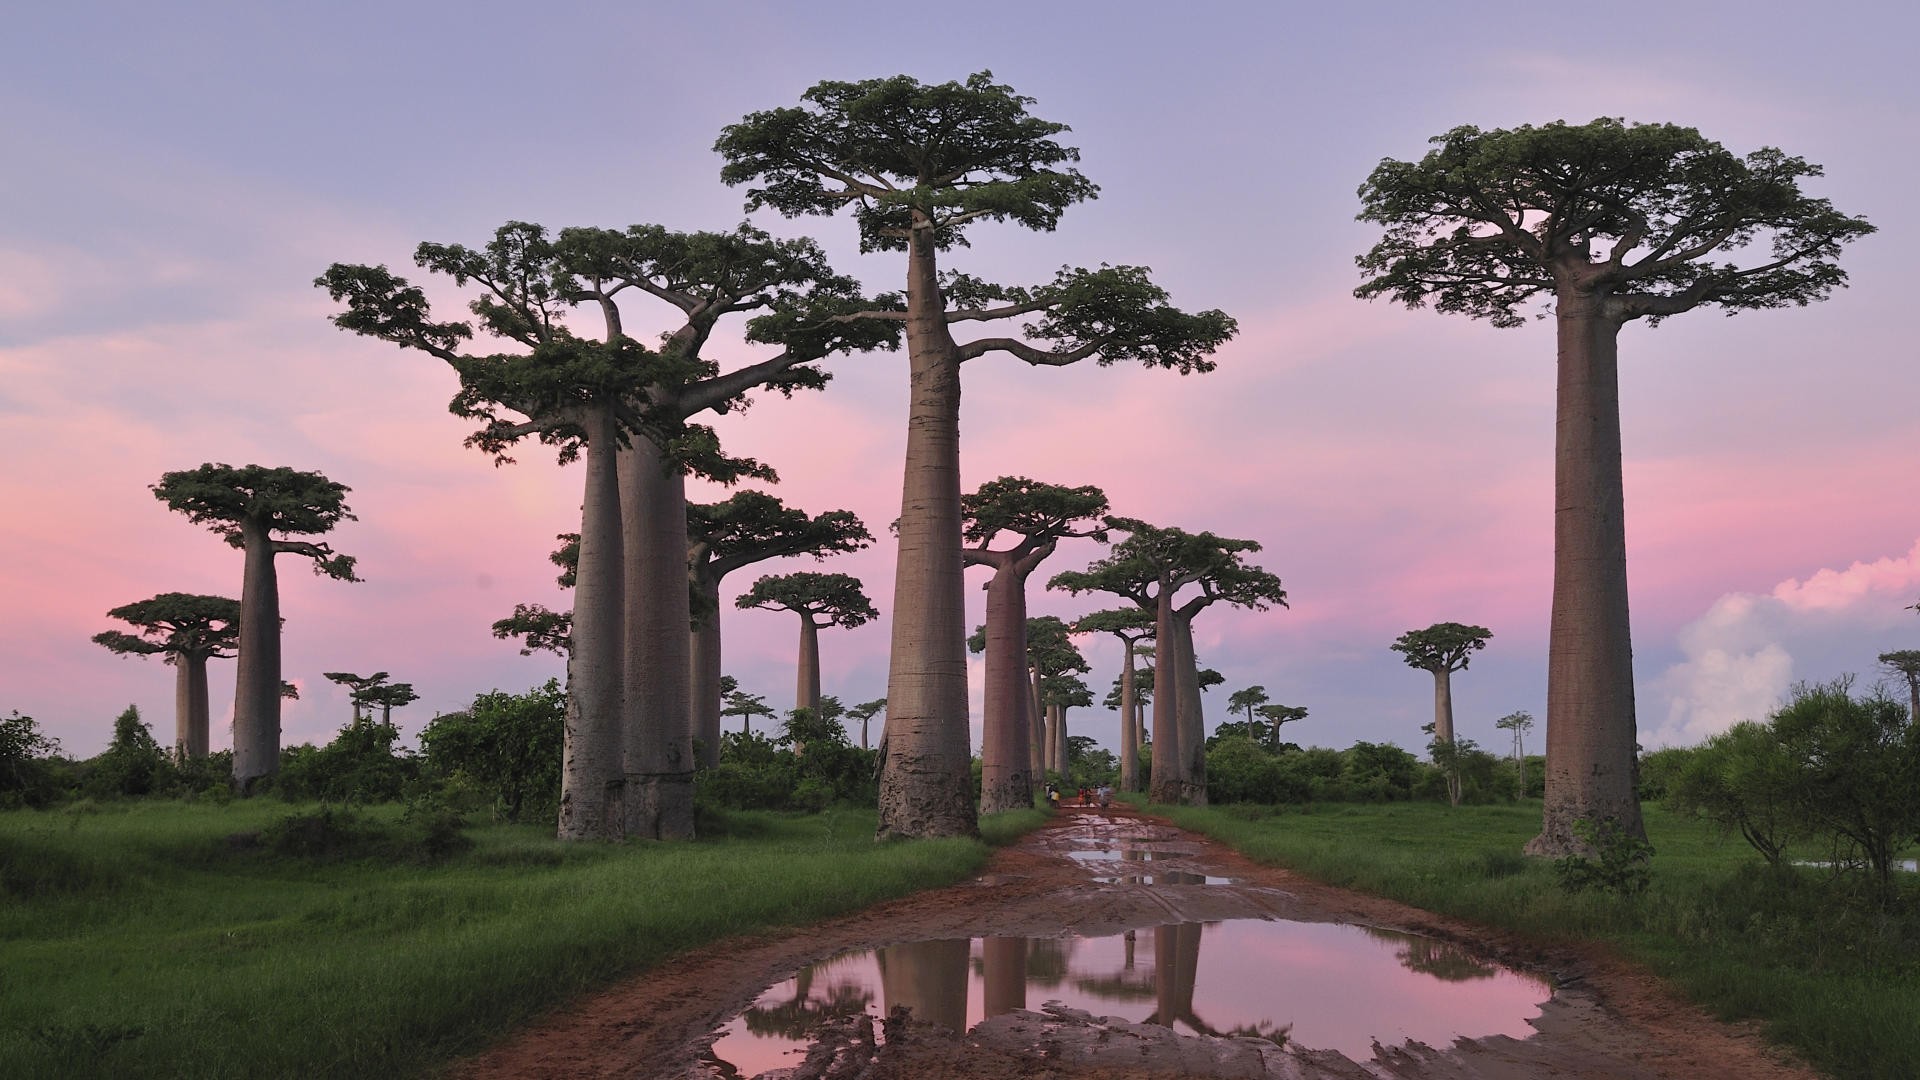 General 1920x1080 trees nature Madagascar baobabs landscape baobab trees puddle dirt road